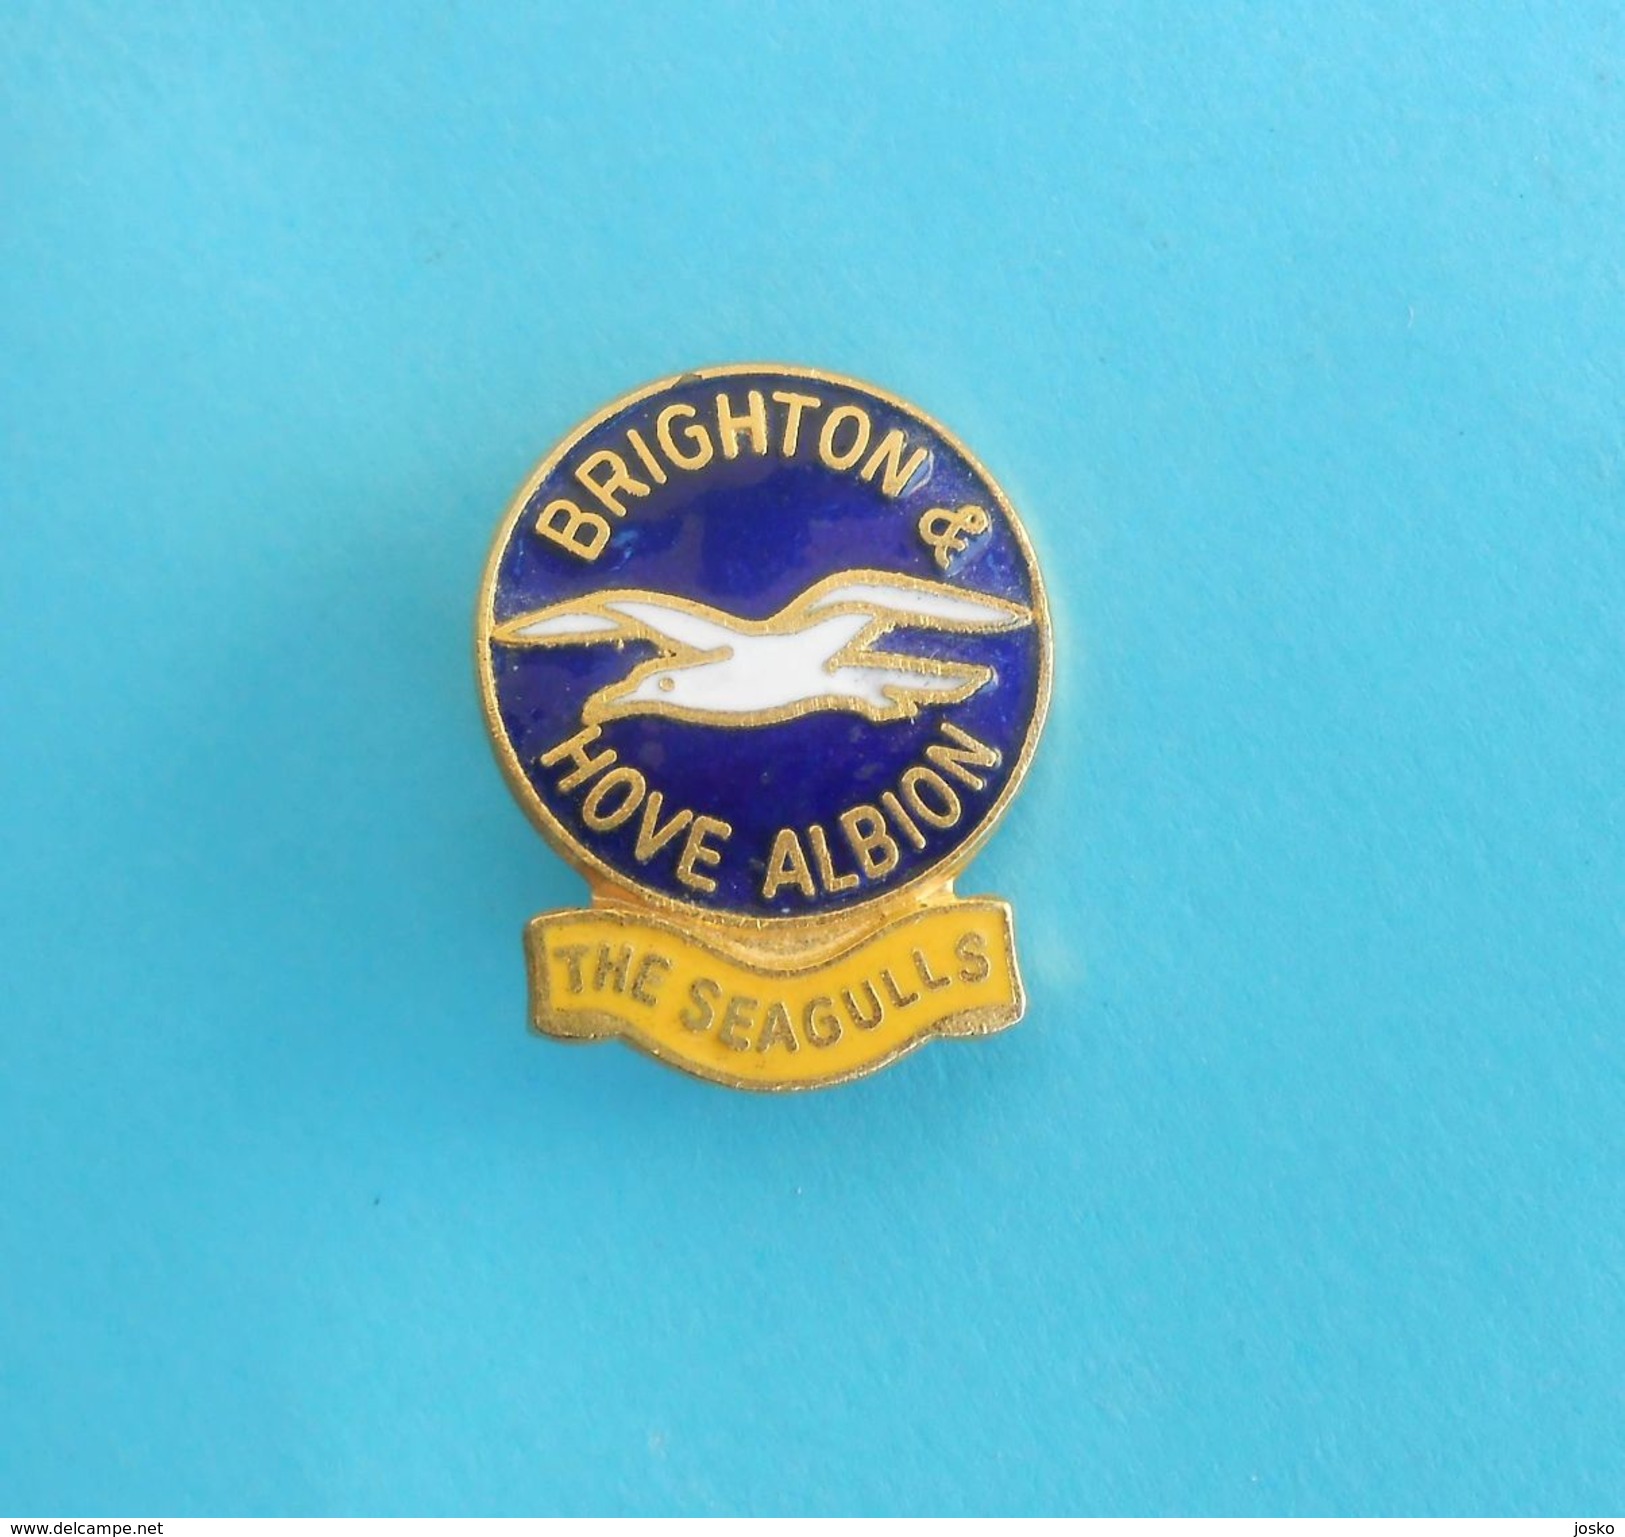 BRIGHTON & HOVE ALBION FC - England Football Soccer Club Enamel Pin Badge By COFFER Fussball Futbol Calcio Foot Futebol - Football